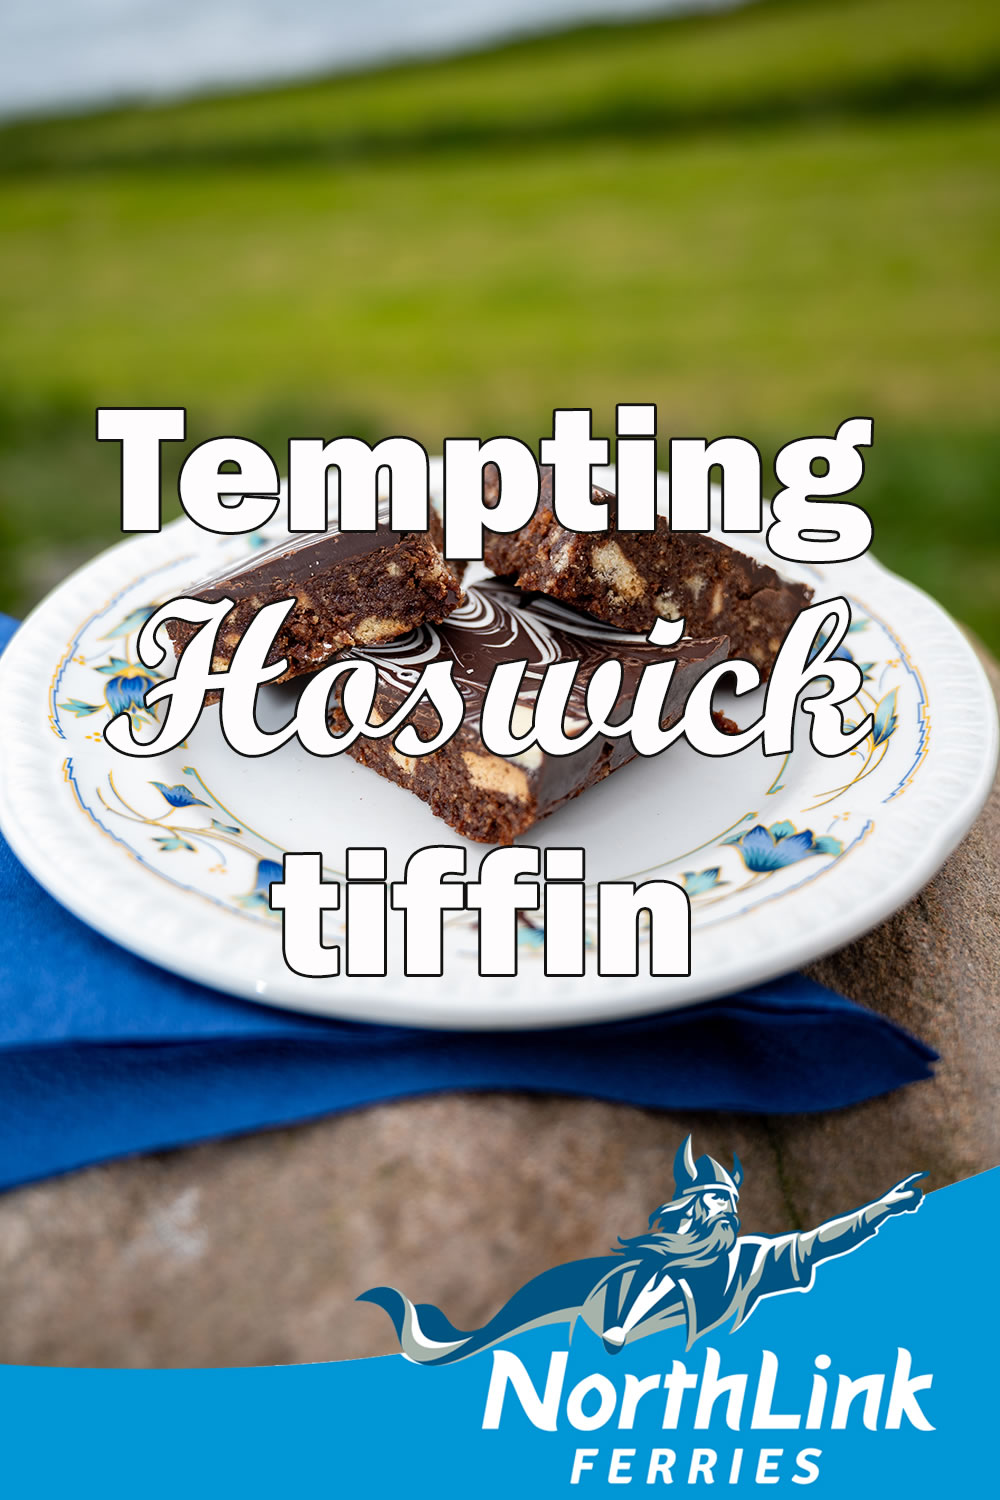 Tempting Hoswick tiffin